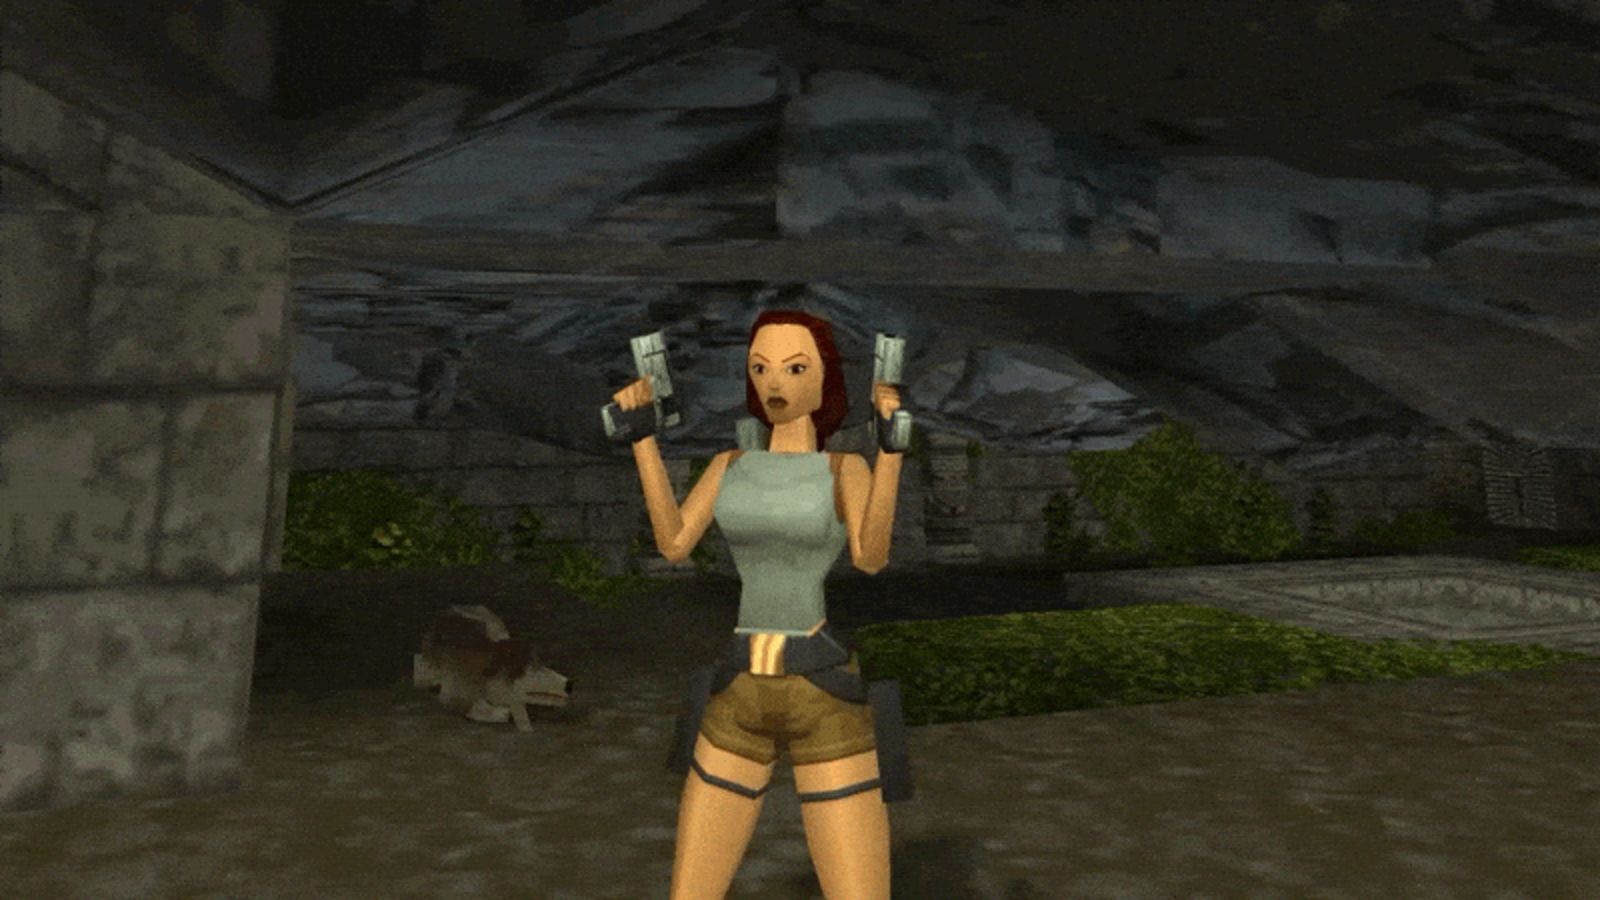 Fun Fact: Lara Croft was once named Lara Cruz early in development